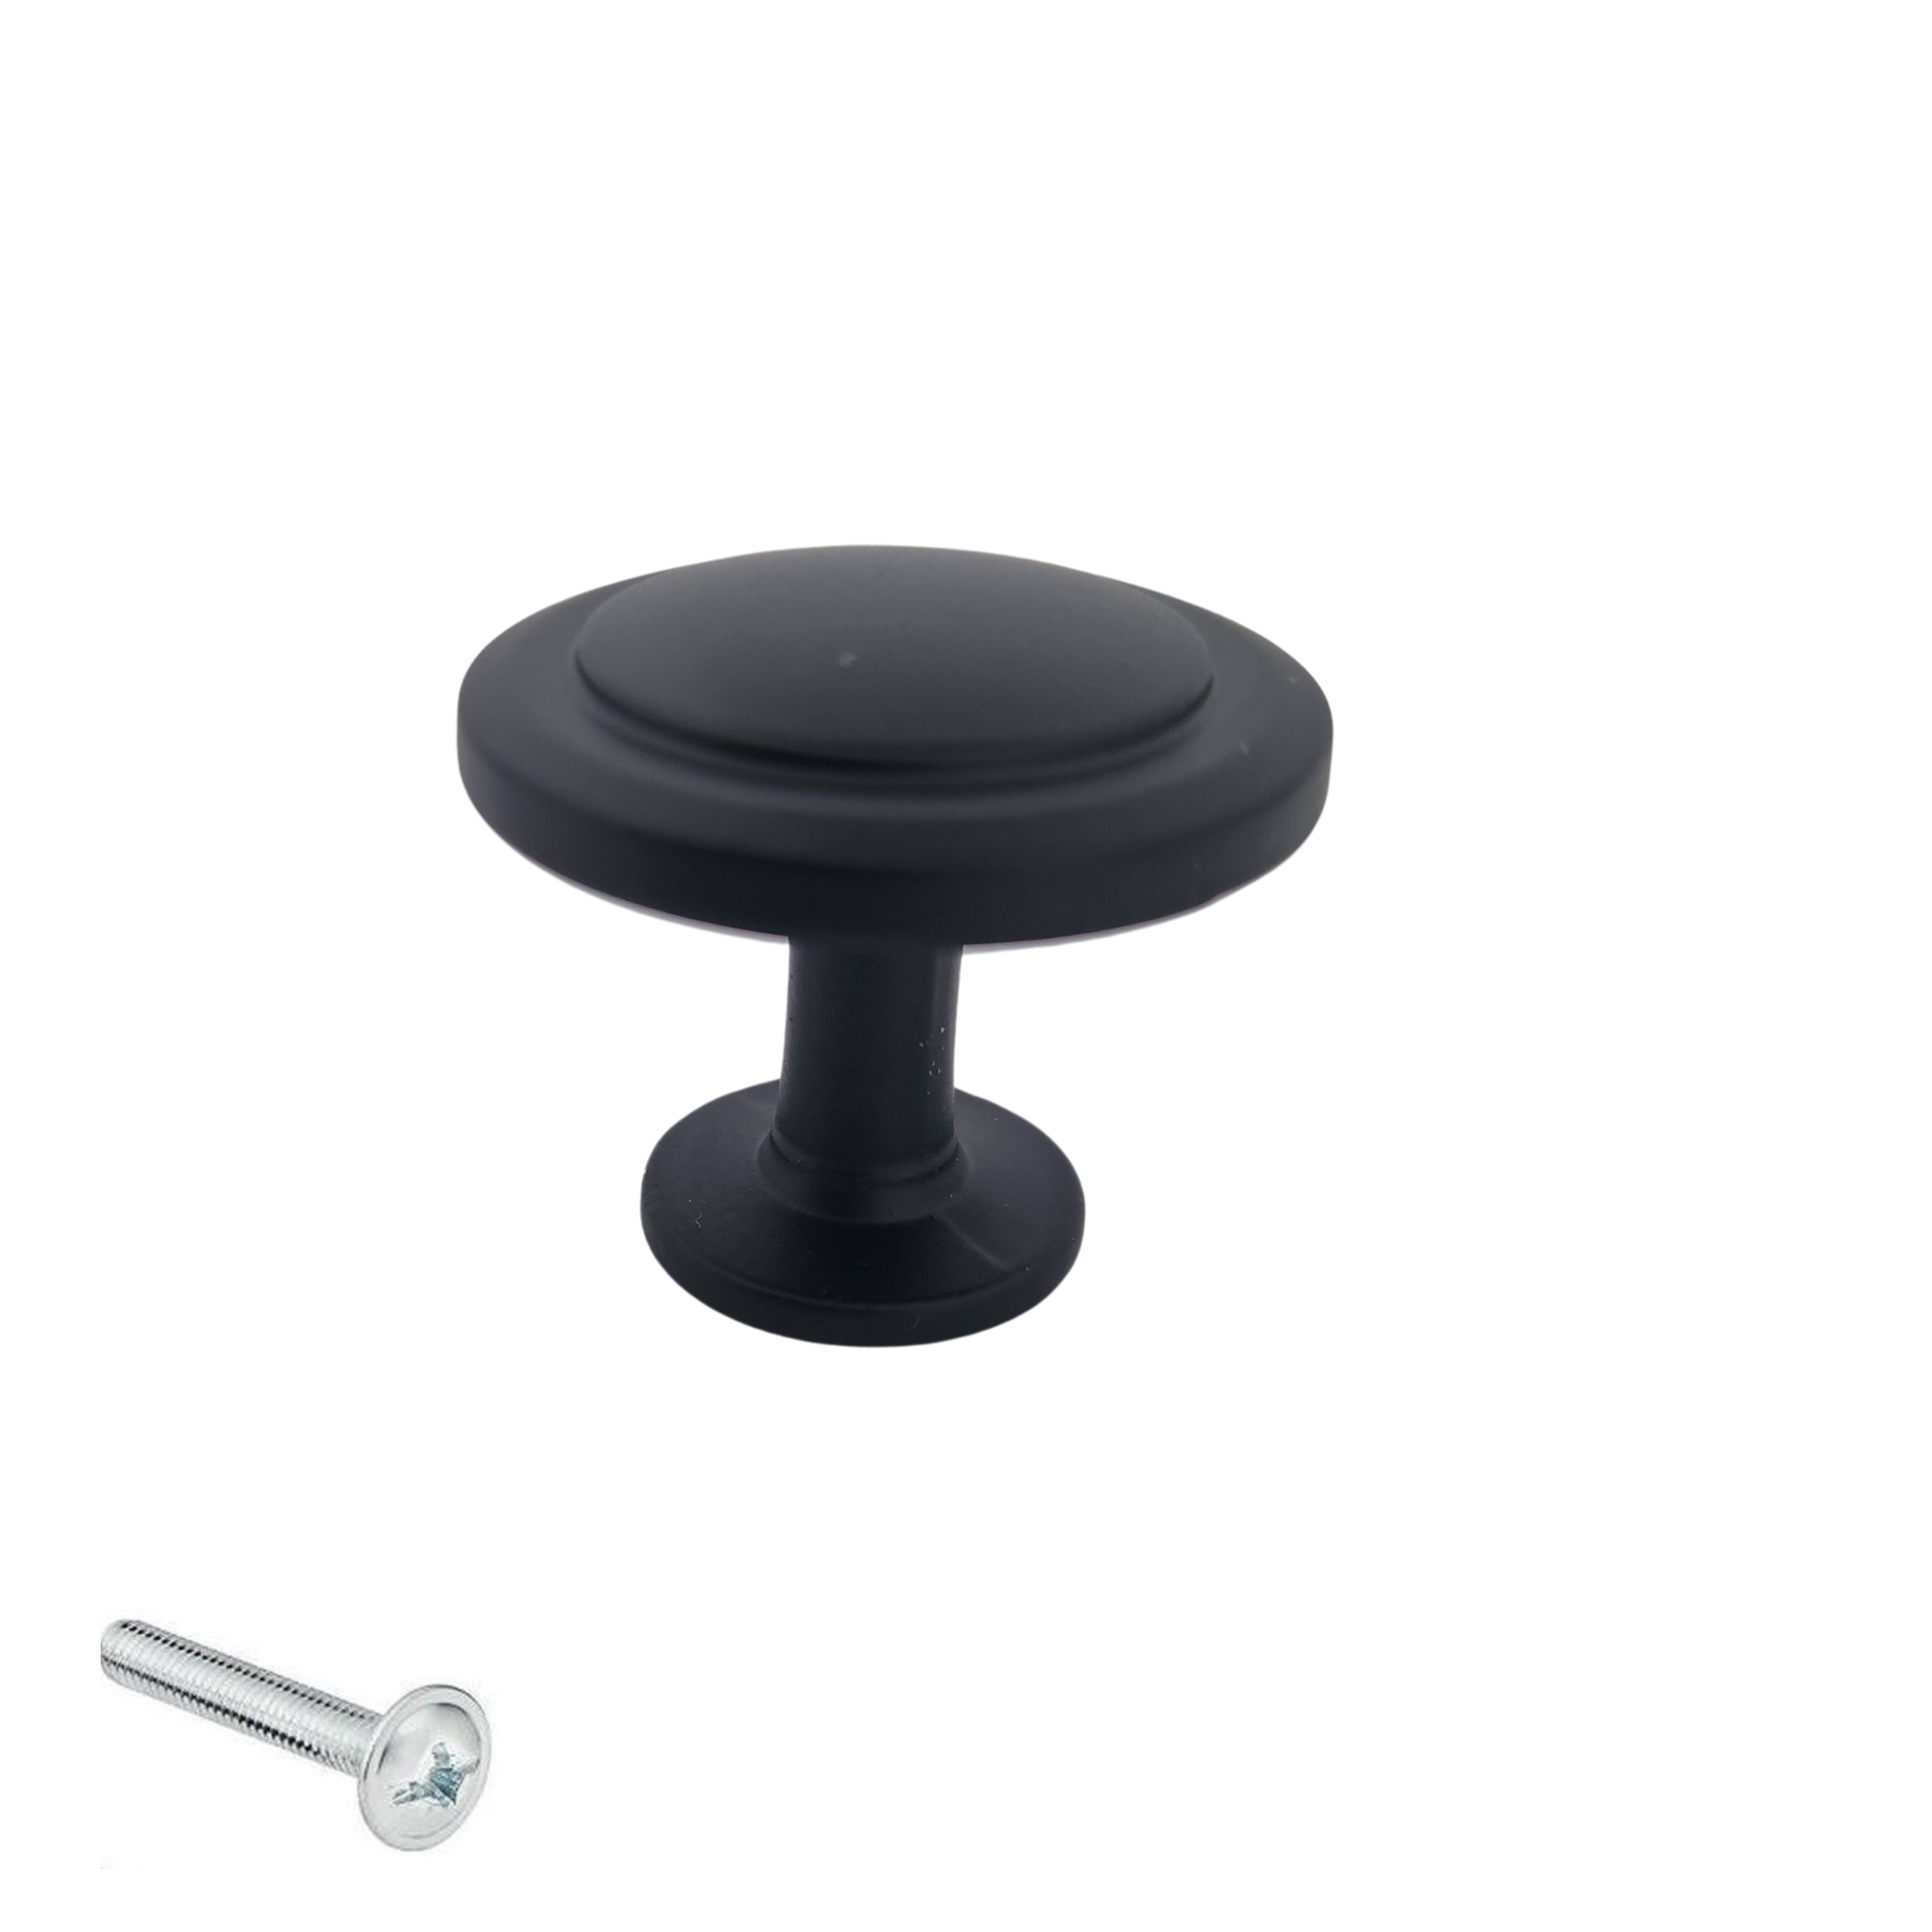 Furniture knob black round